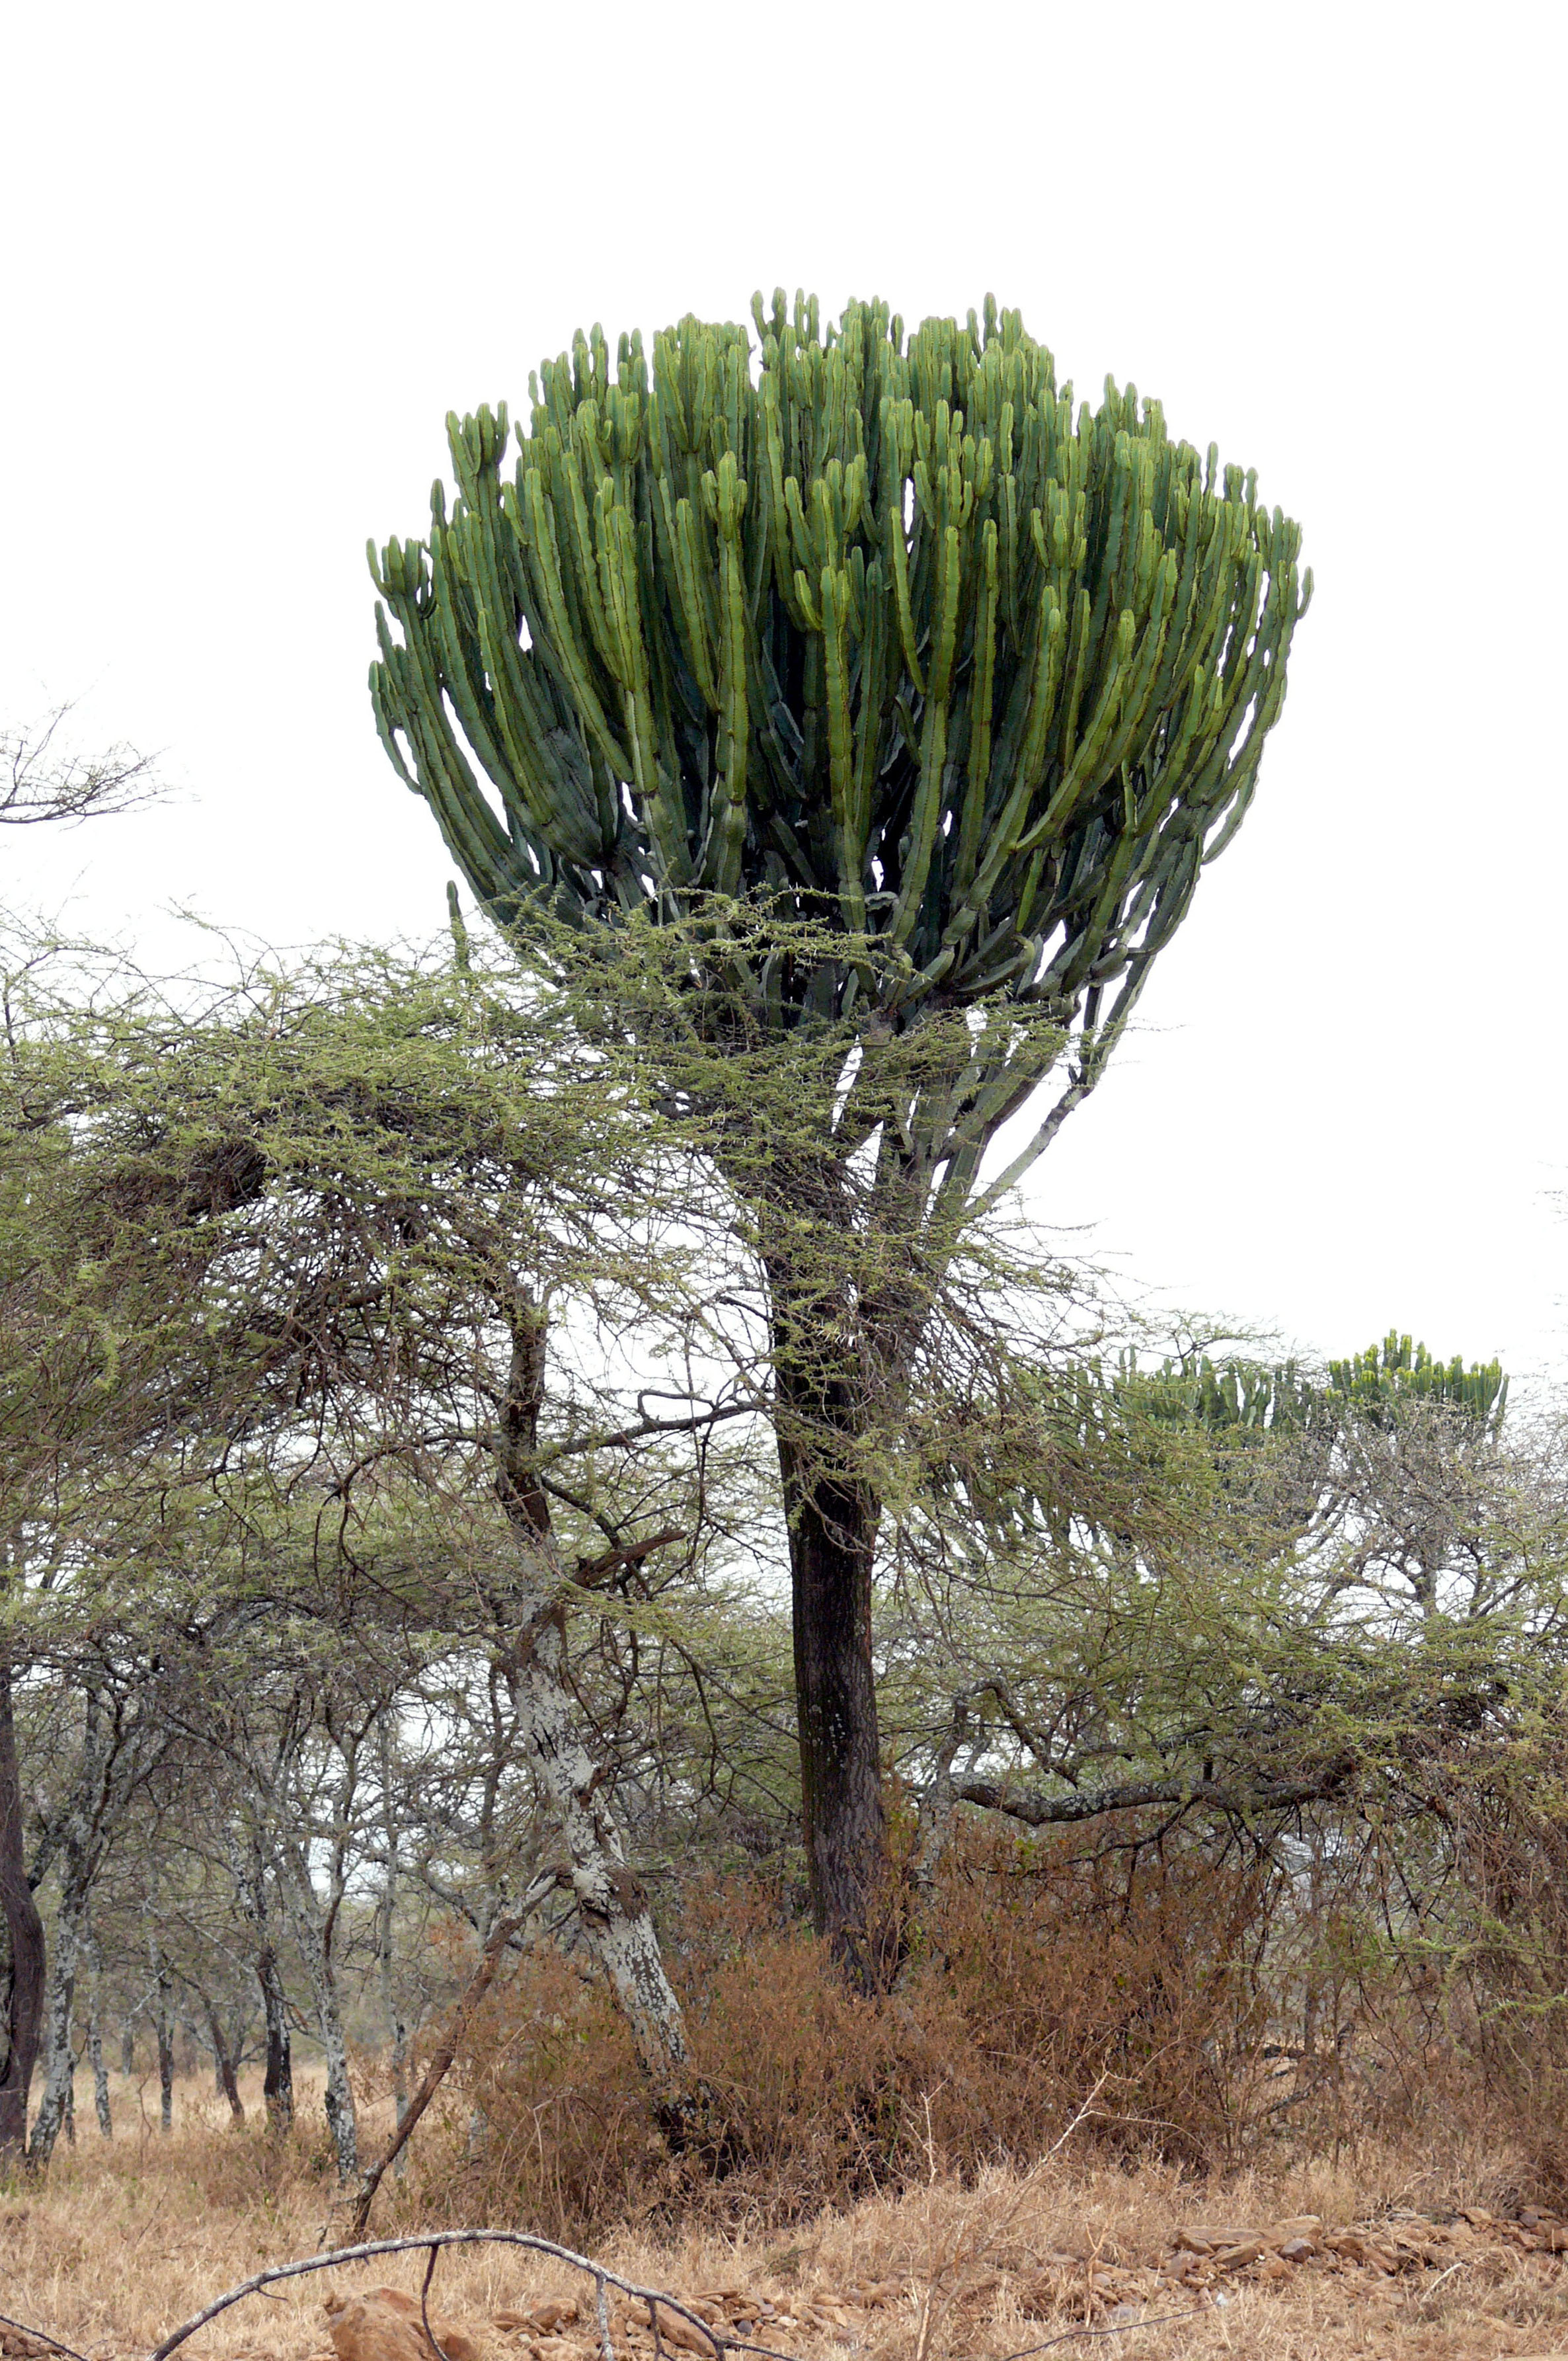 Euphorbia candelabrum (euphorbia, candelabra tree)